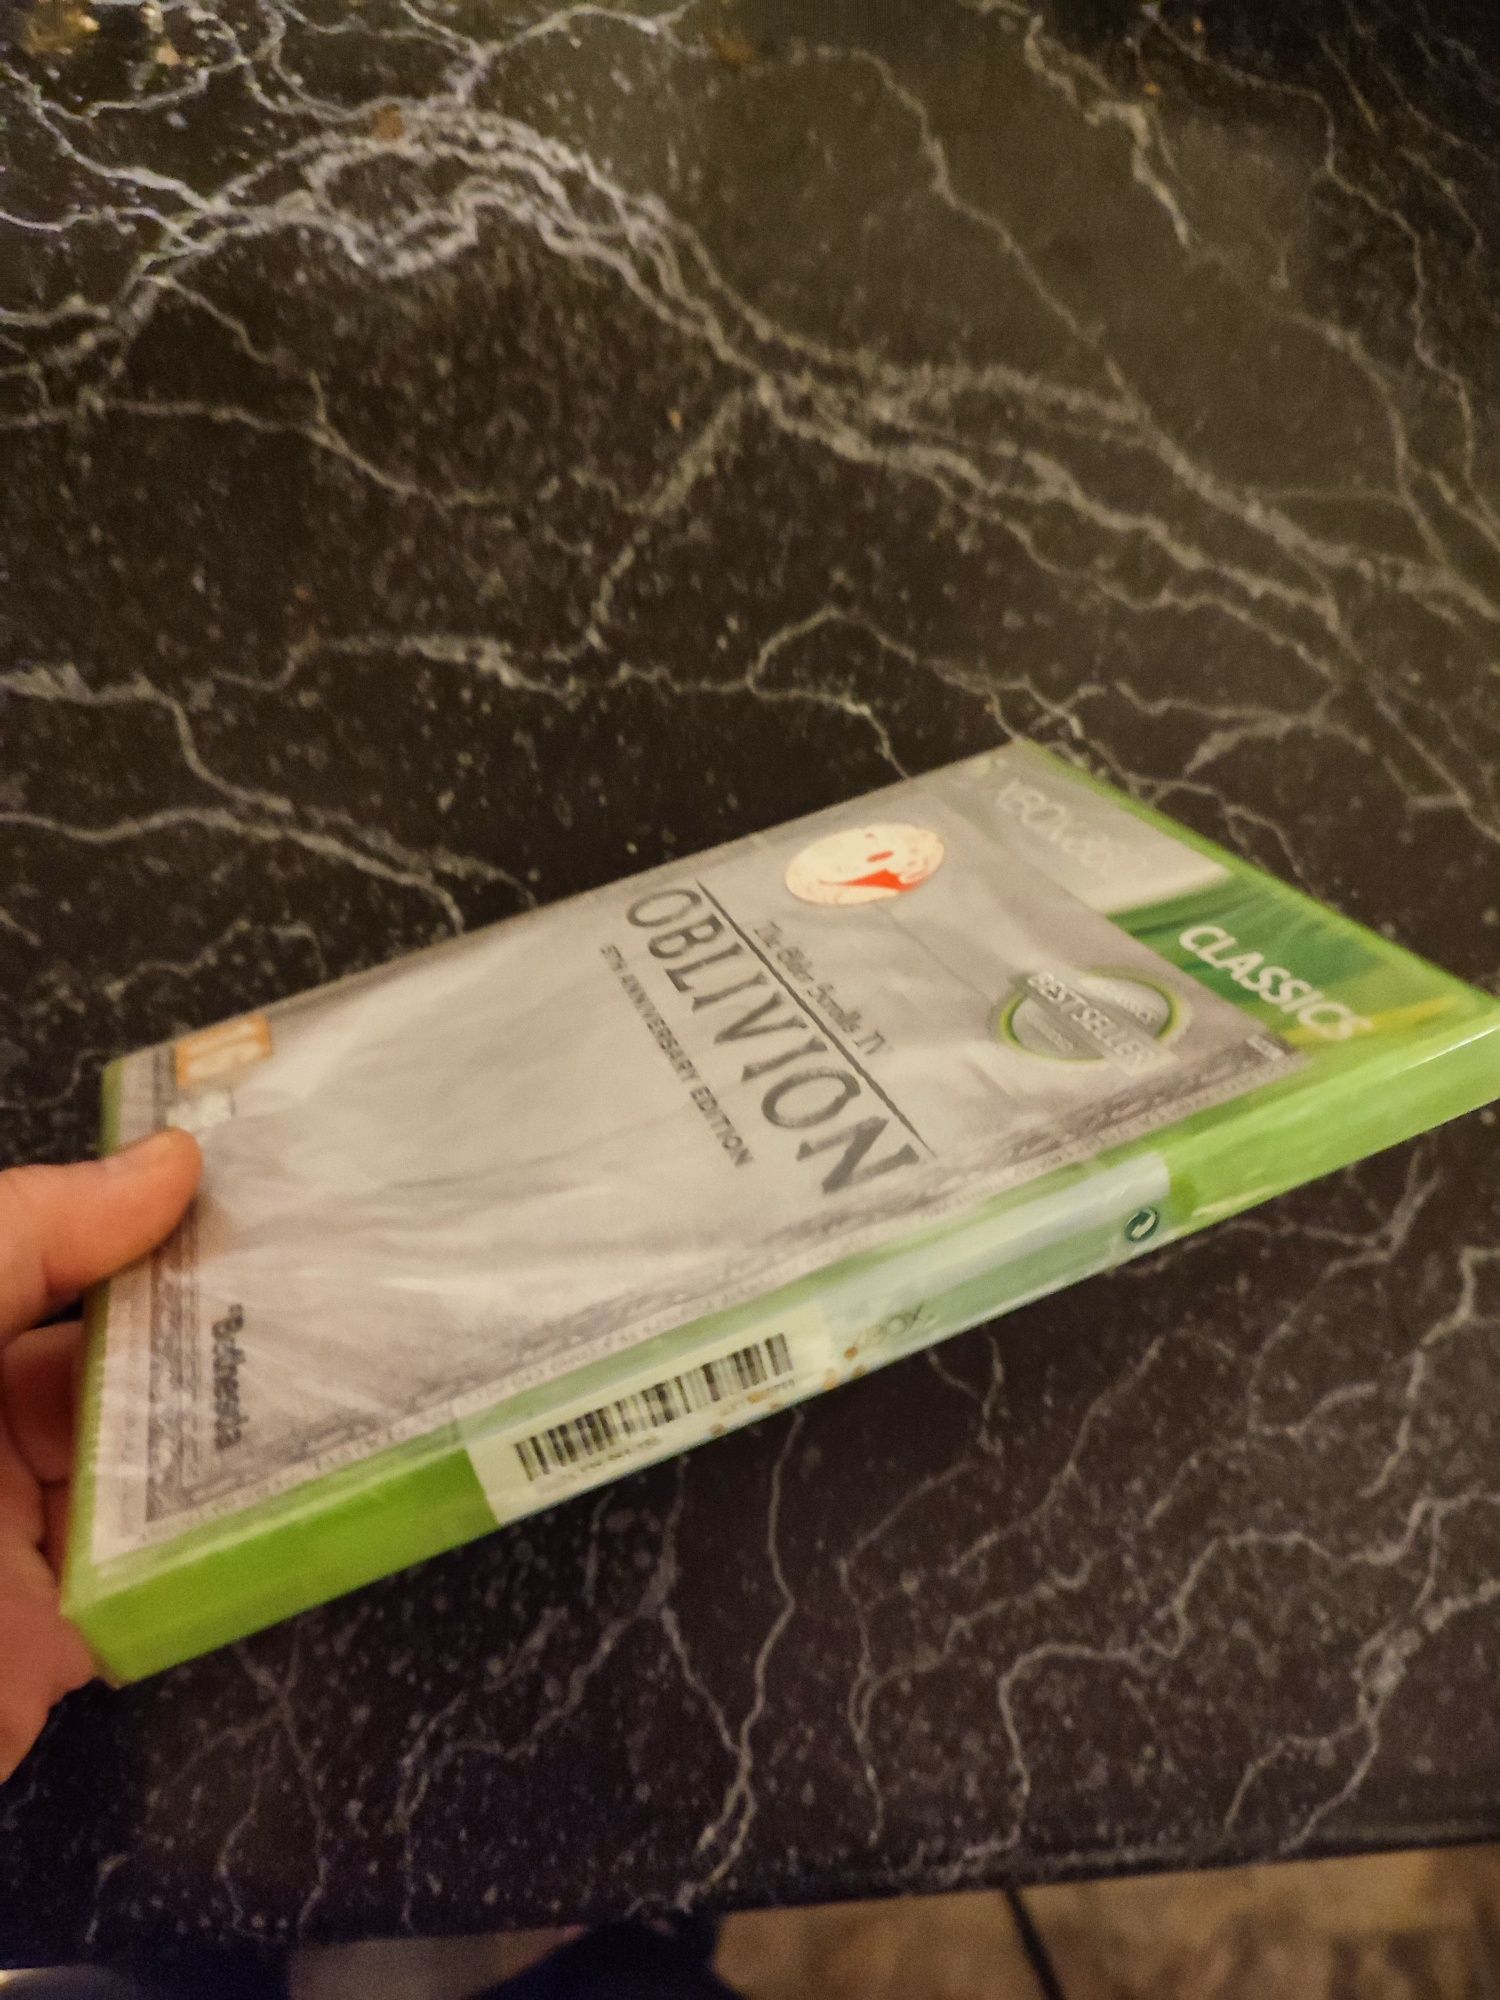 Oblivion Elder Scrolls 5th Anniversary Edition na XBox